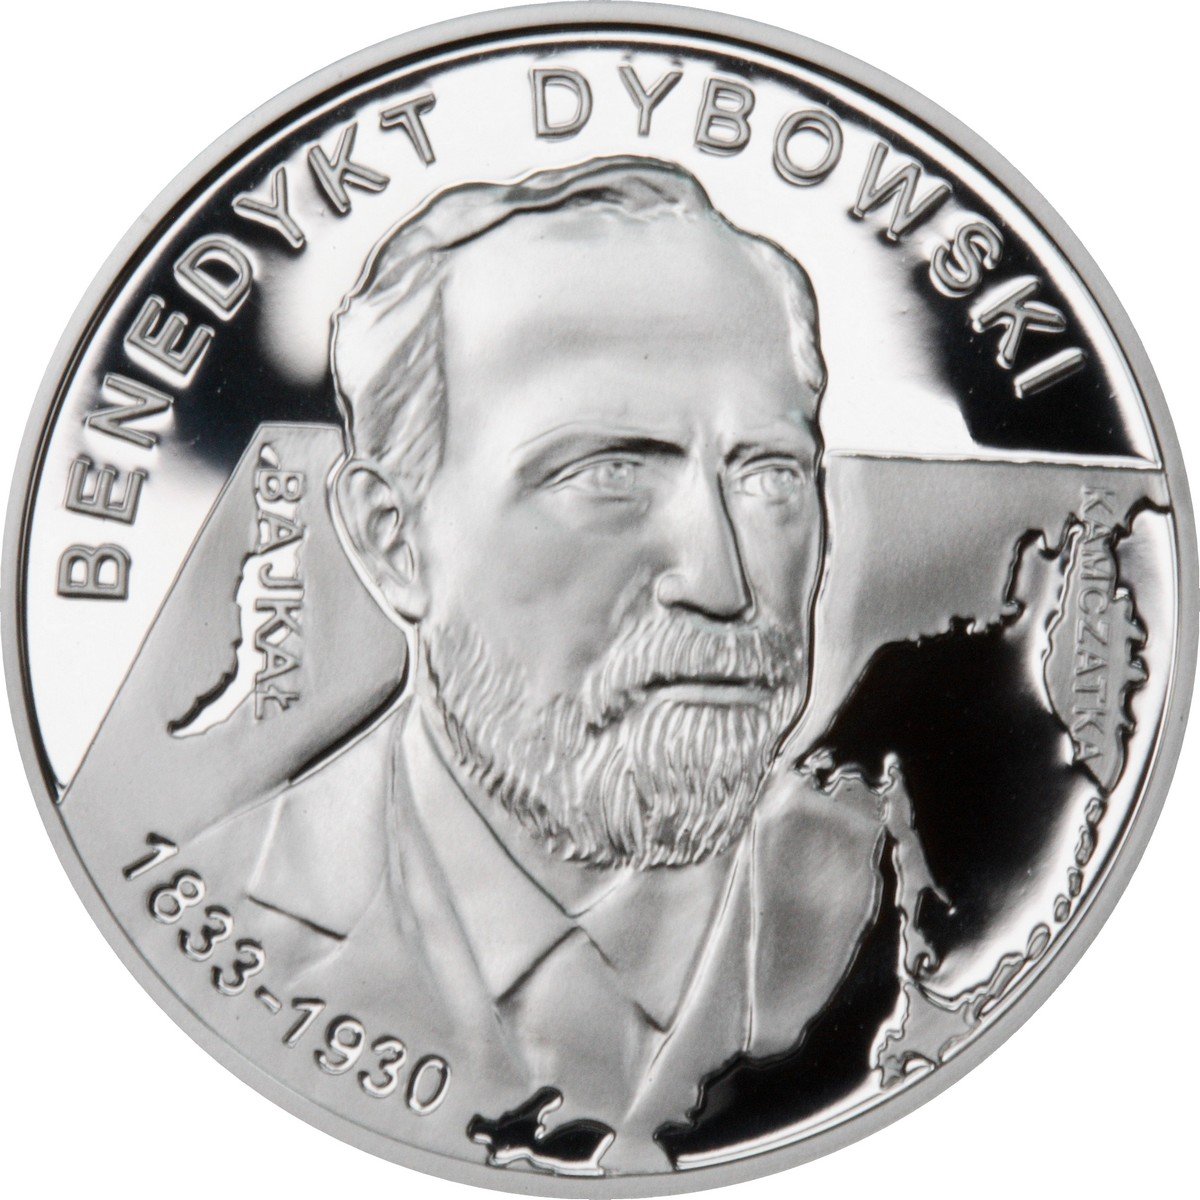 10zl-benedykt-dybowski-1833-1930-rewers-monety